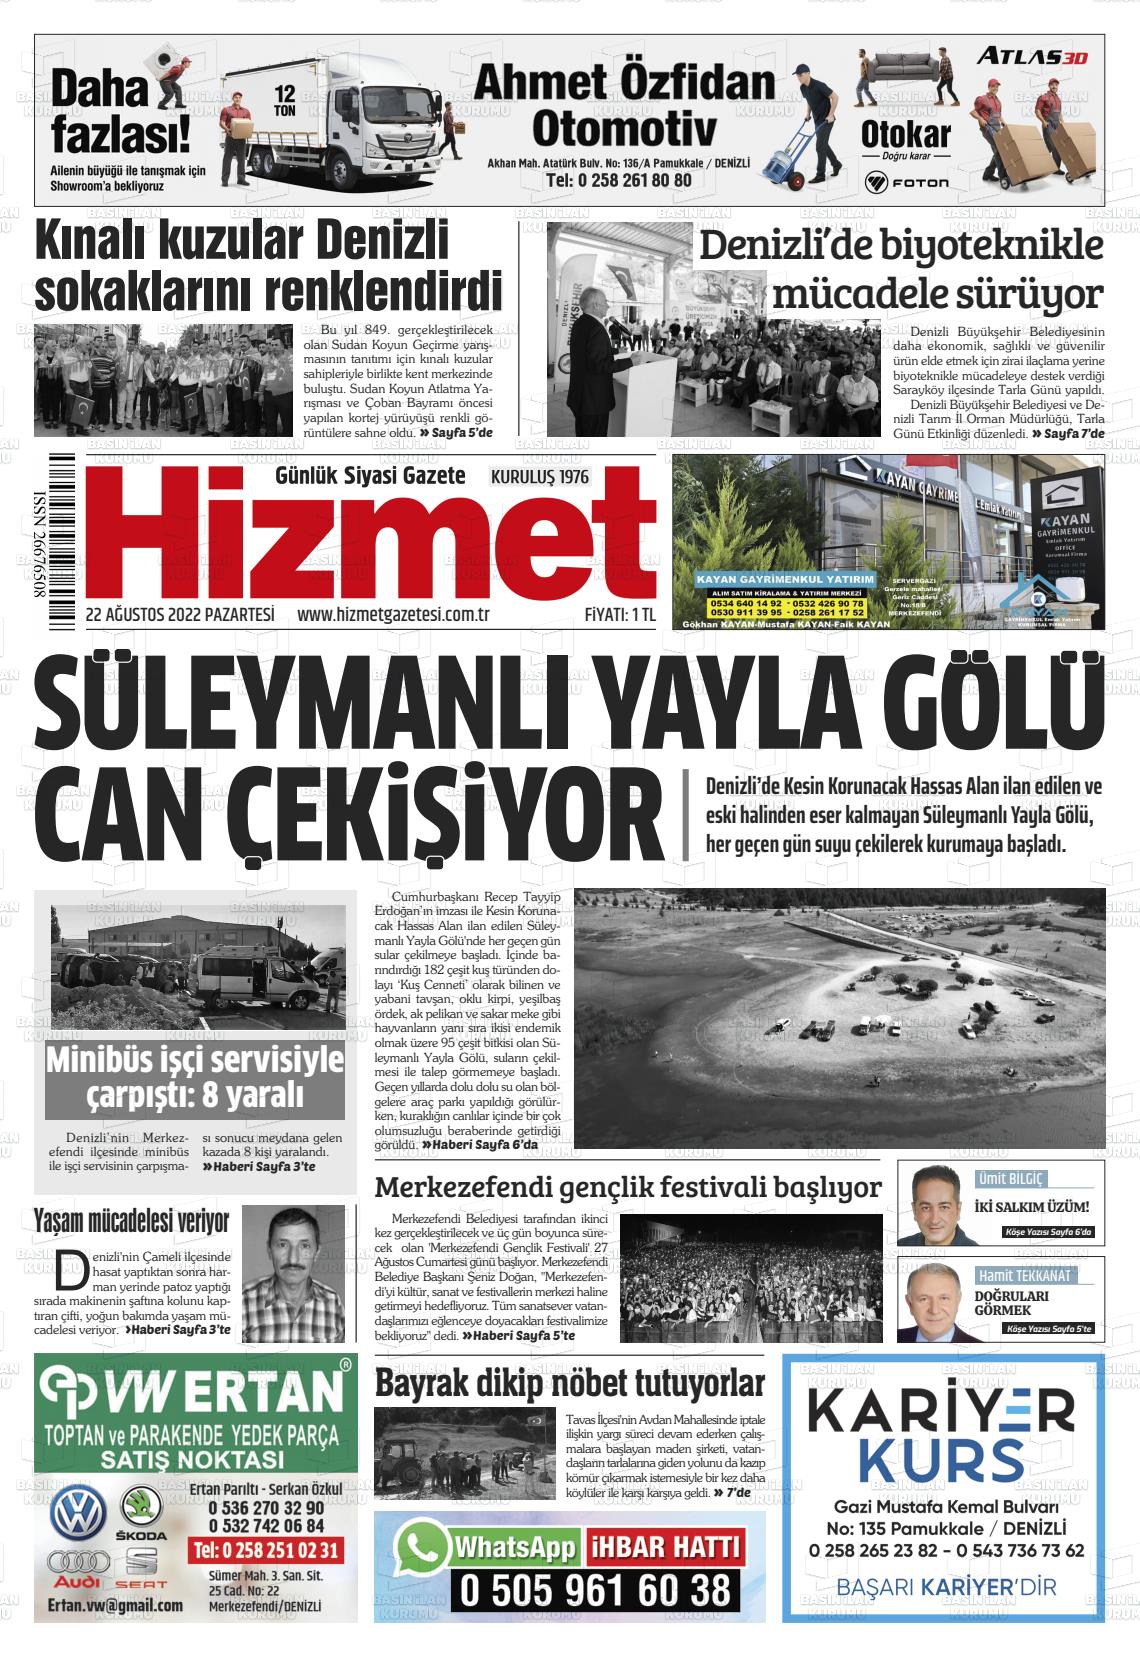 22 Ağustos 2022 Hizmet Gazete Manşeti